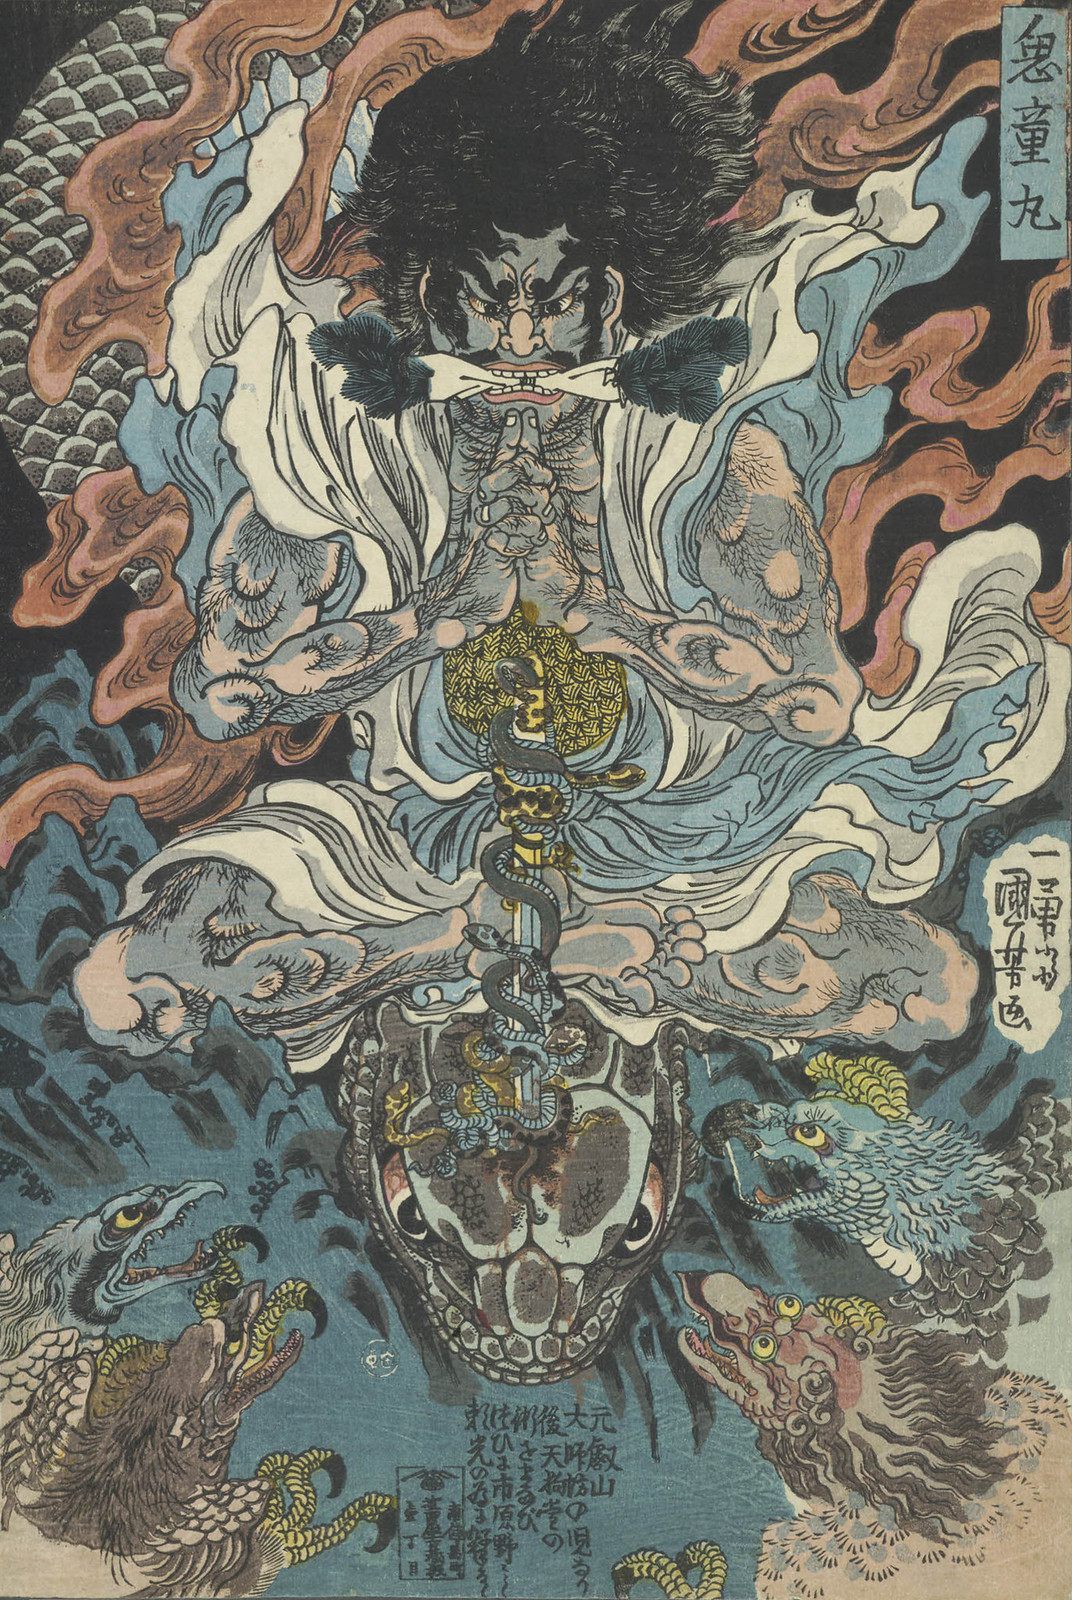 Utagawa Kuniyoshi - Kidomaru seated cross-legged on the head of a giant python, learning magic from the tengu, 1843